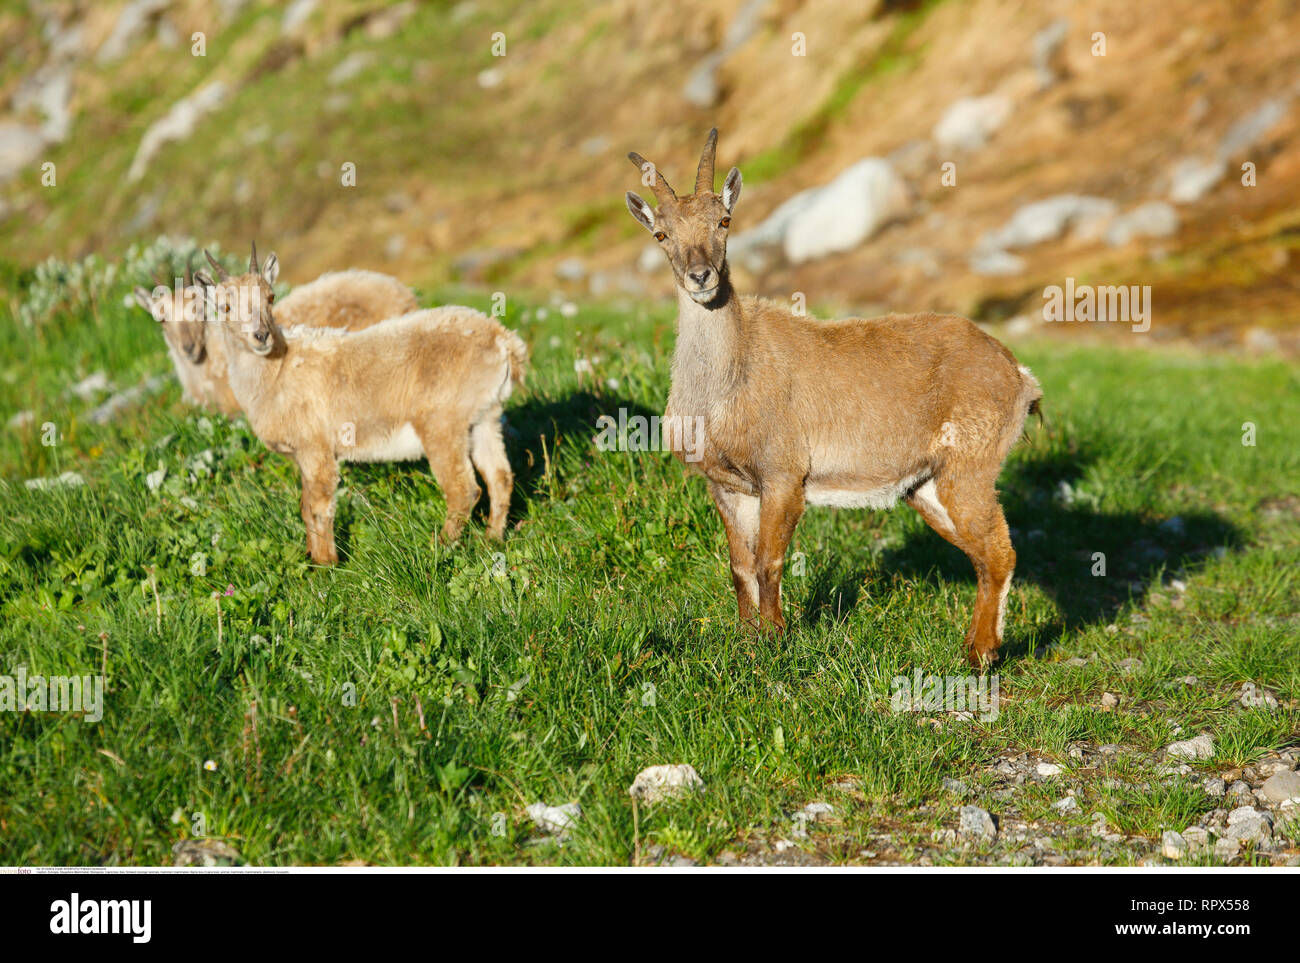 zoology / animals, mammal / mammalian, Alpine ibex (Capra ibex), Additional-Rights-Clearance-Info-Not-Available Stock Photo